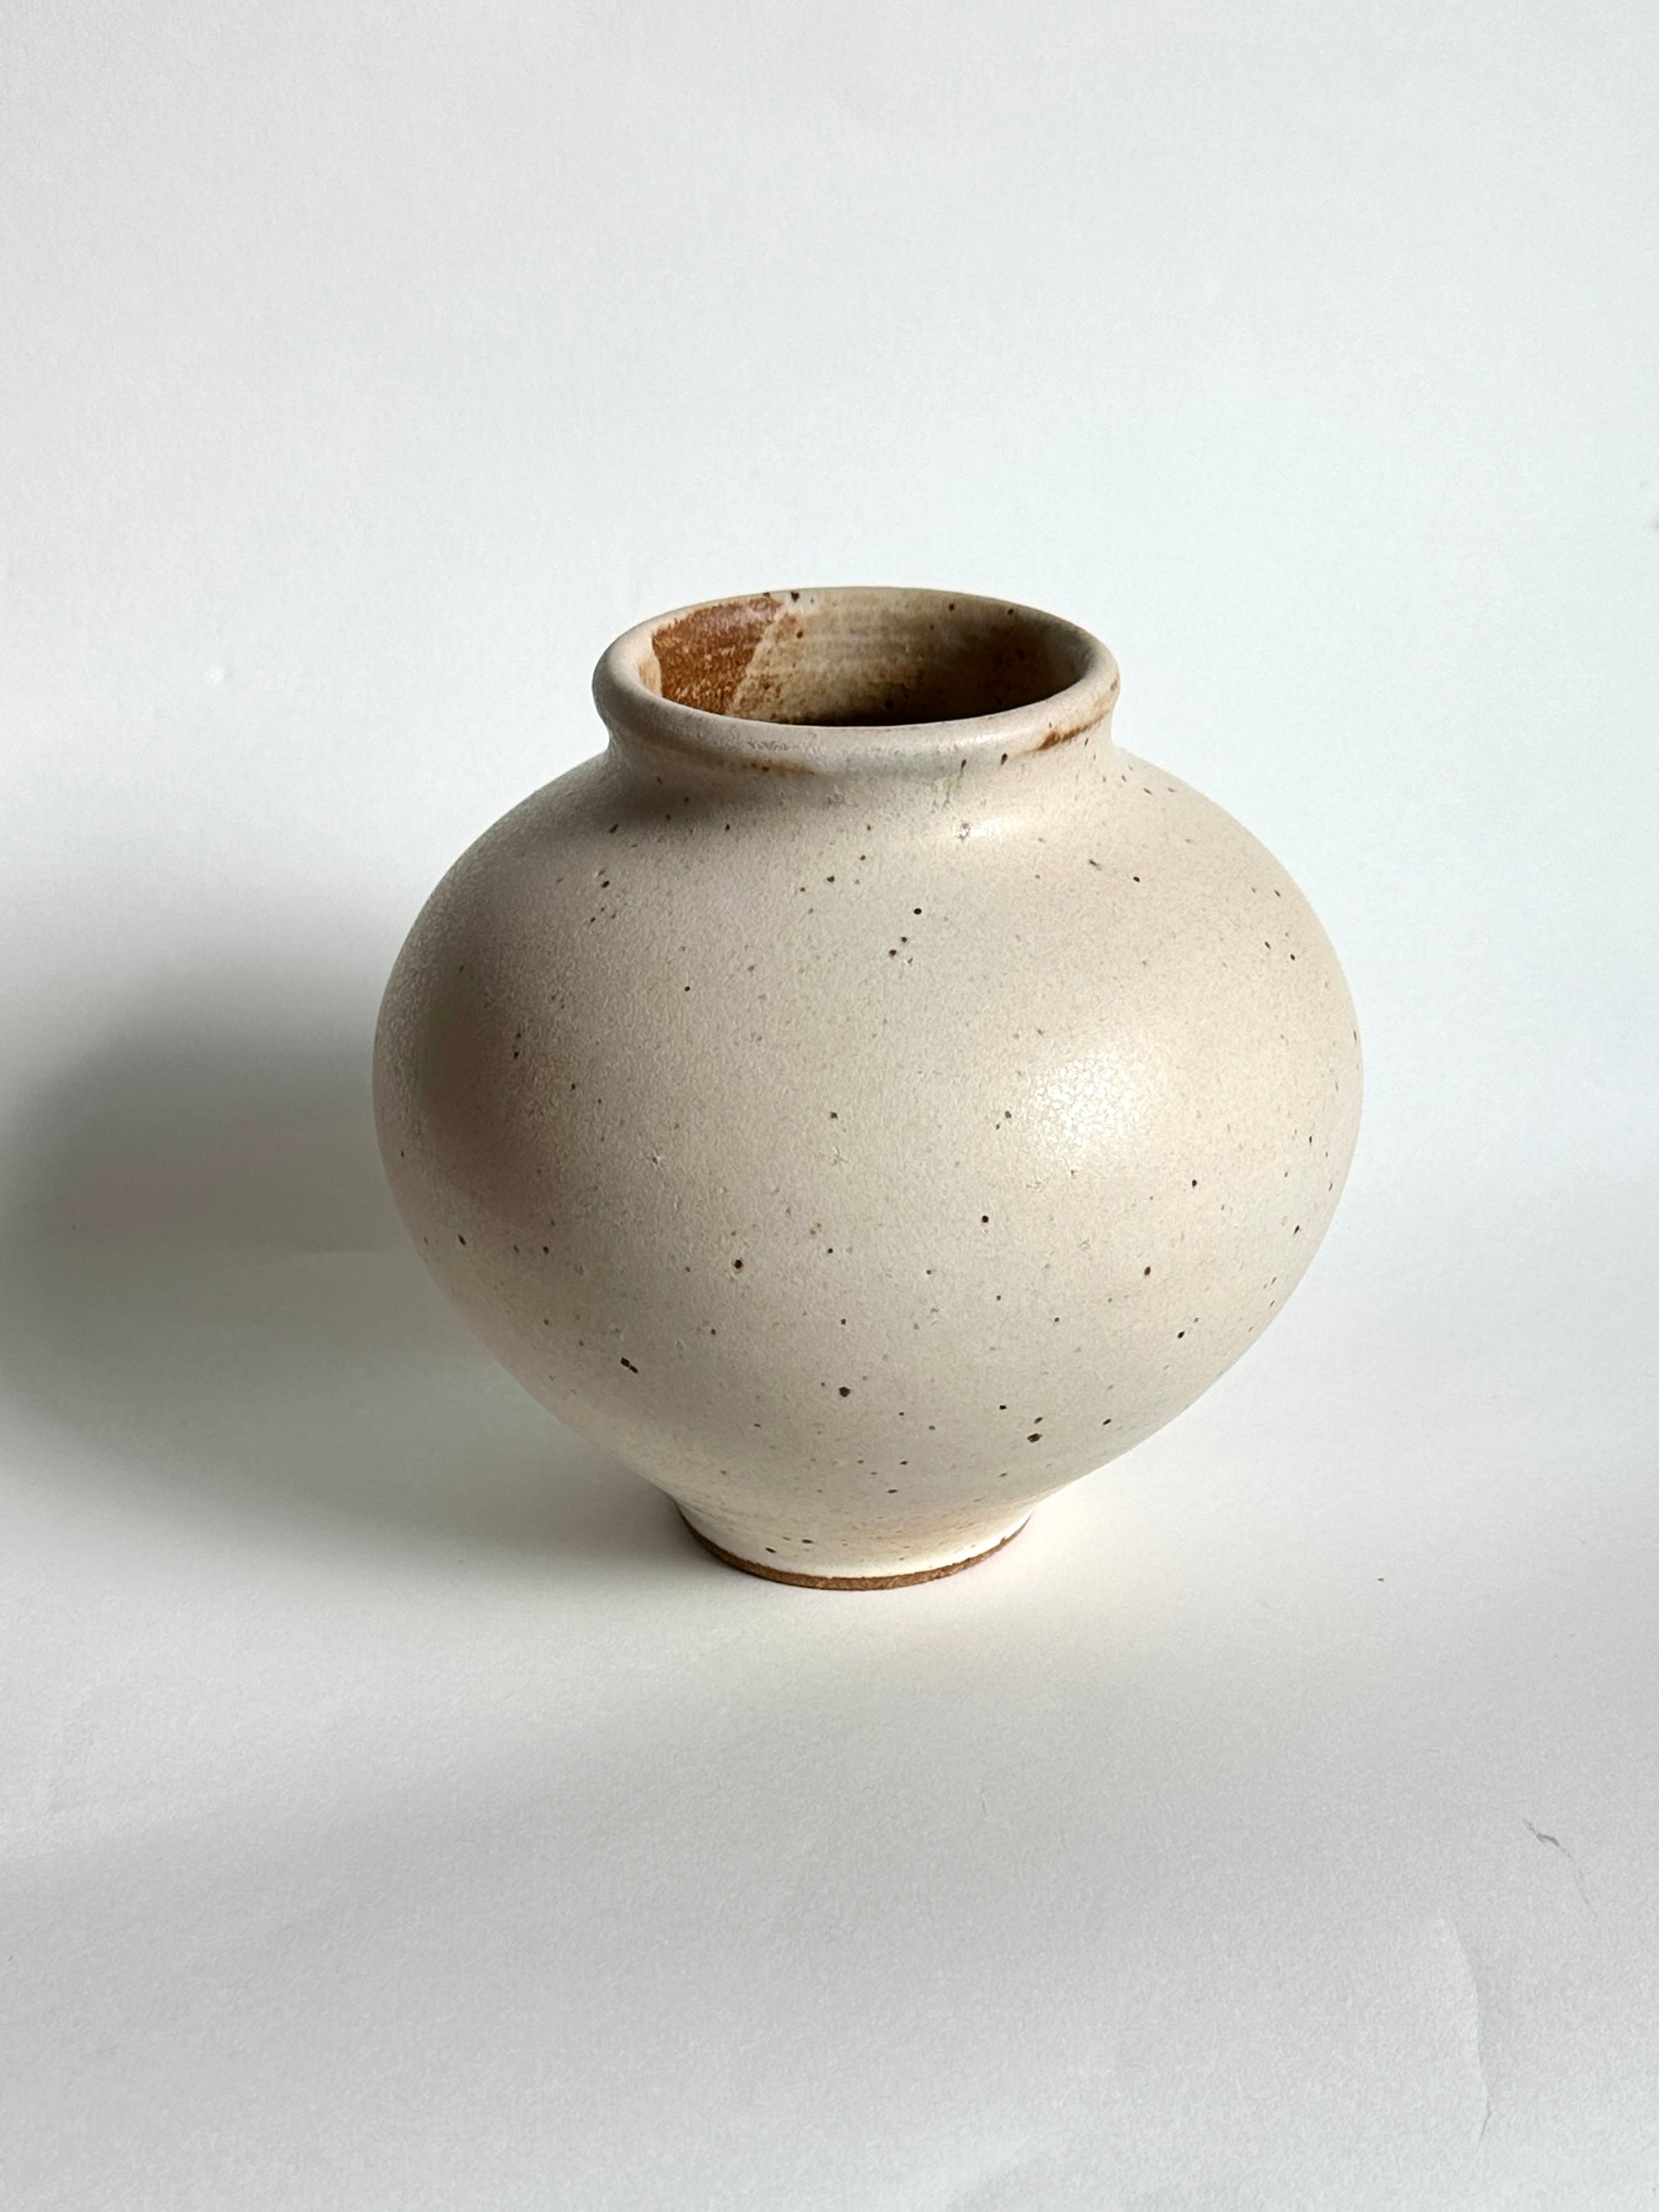 Warm satin white speckled vase